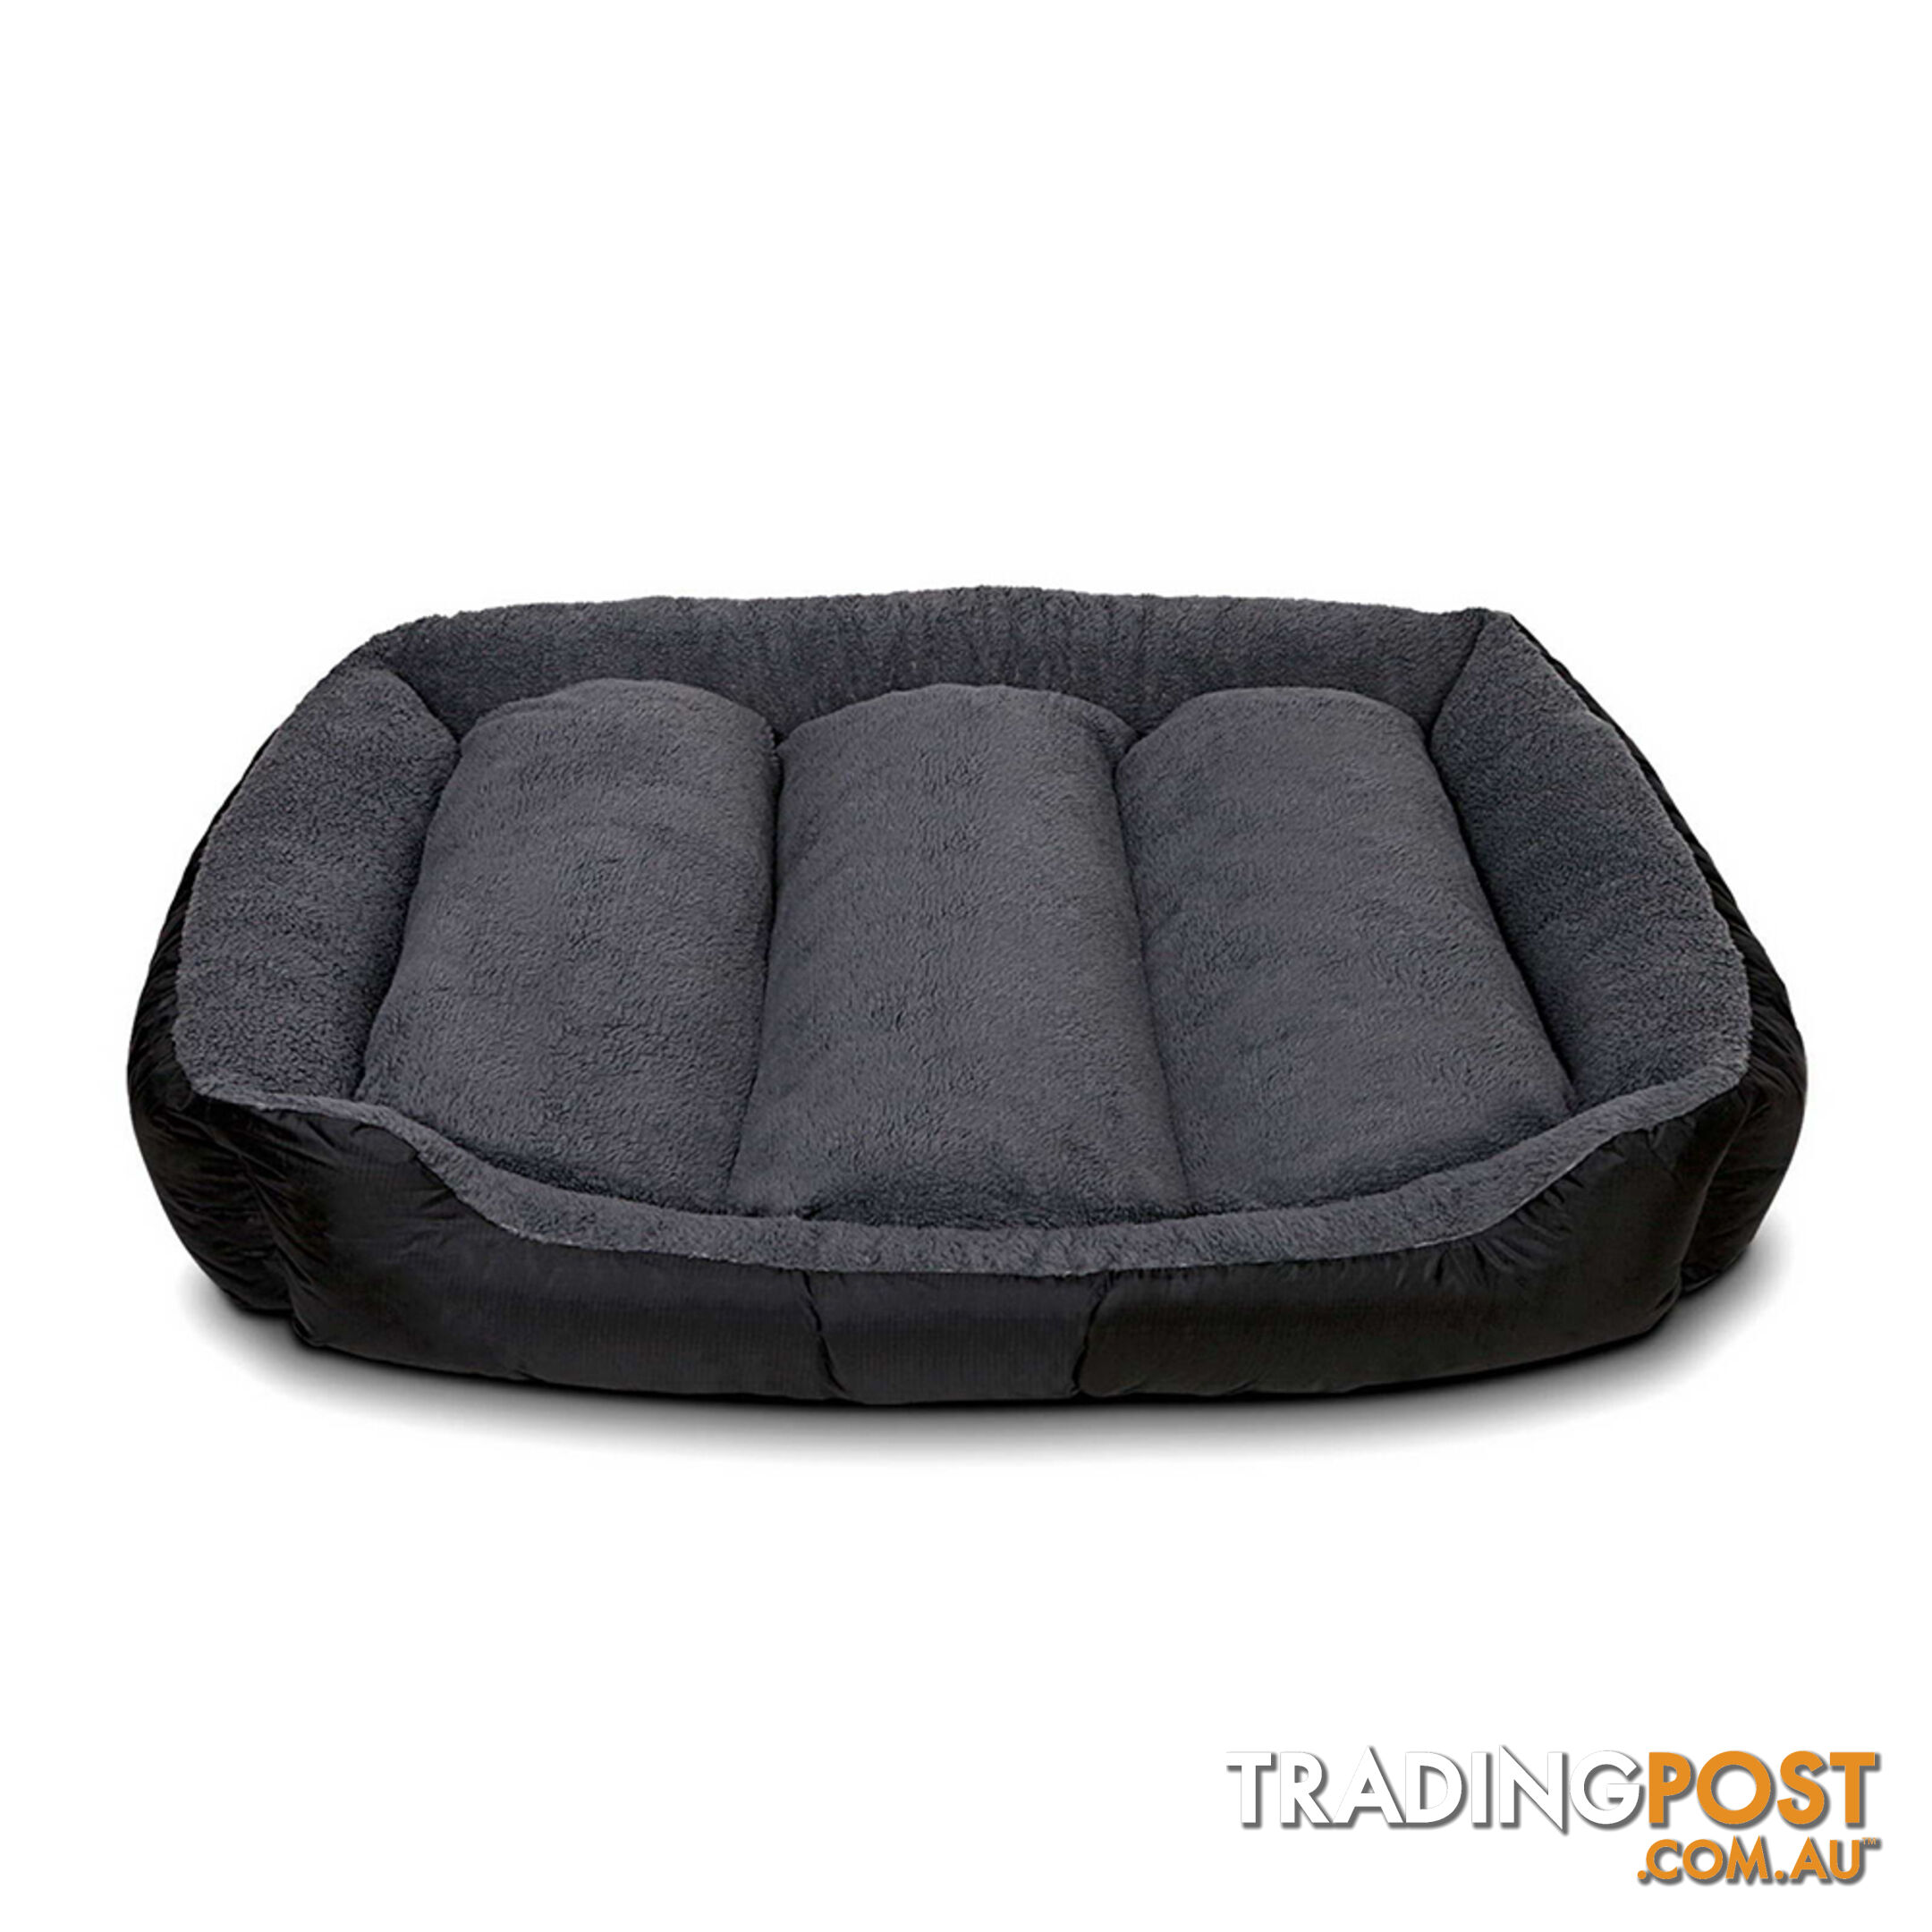 Luxury Waterproof Dog Bed Pet Cat Soft Warm Cushion Fleece Lined Beds Large